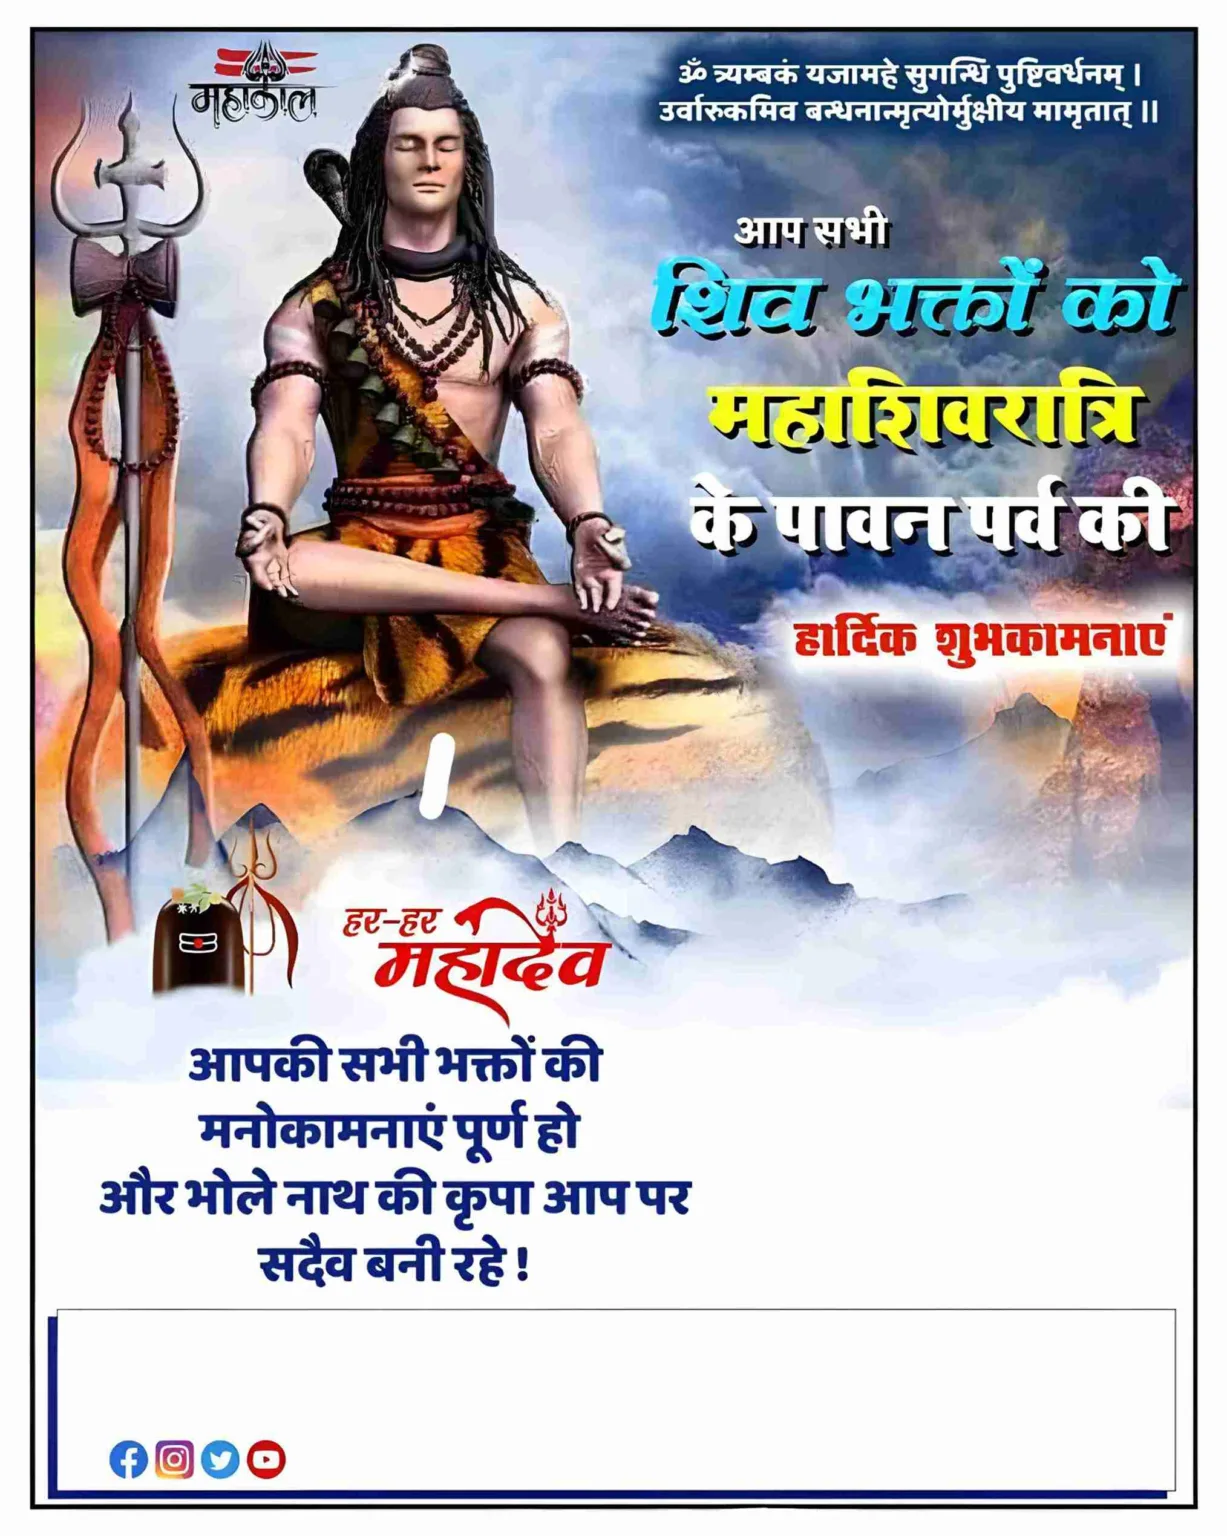 Maha Shivratri wishes banner in hindi